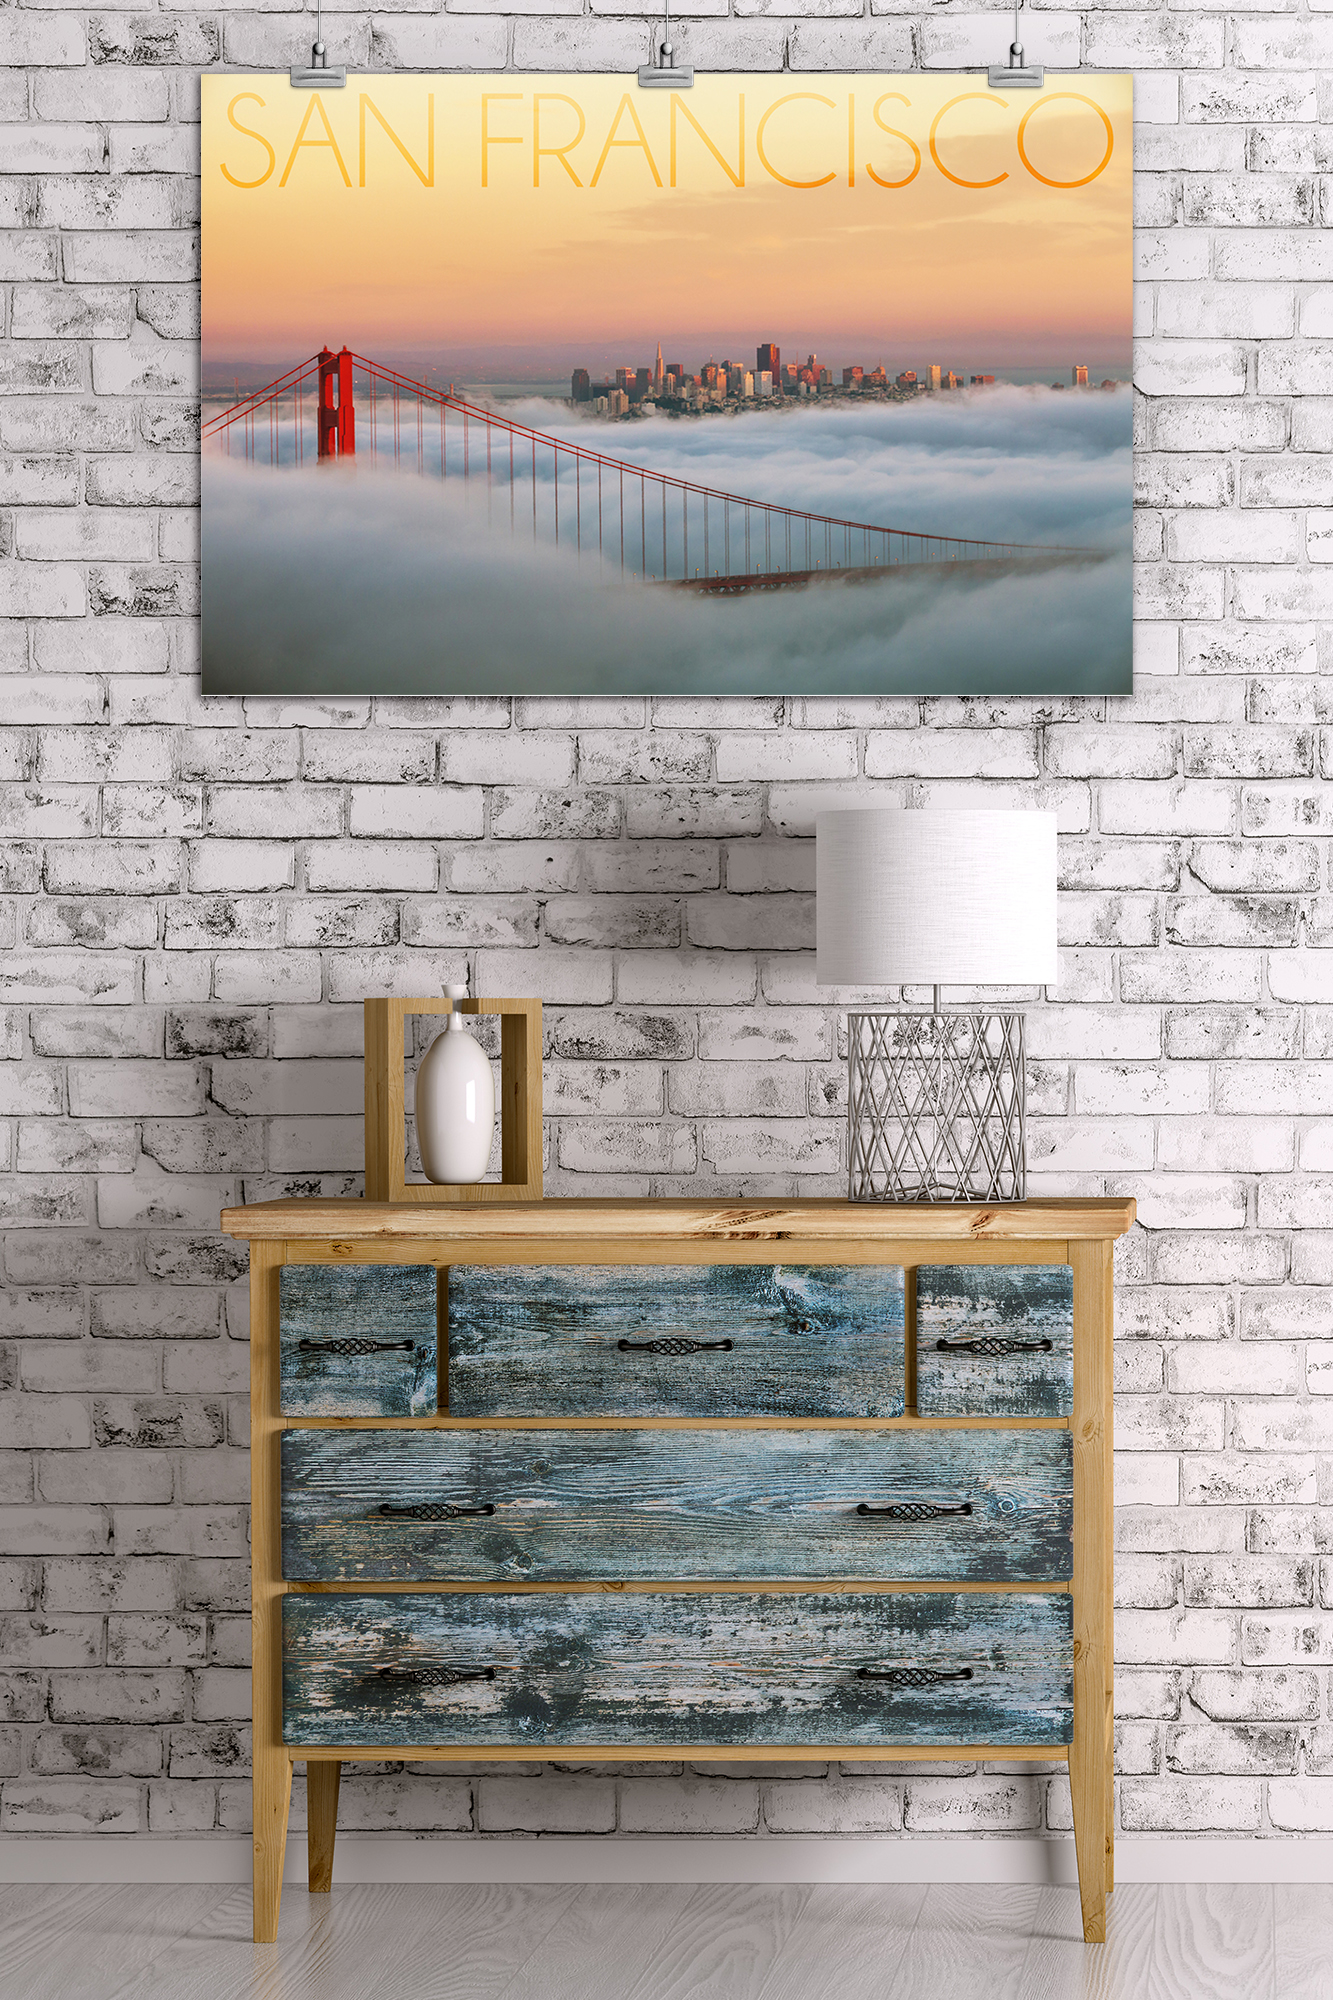 San Francisco, California, Golden Gate Bridge and Fog (24x36 Giclee Gallery Art Print, Vivid Textured Wall Decor) - image 3 of 3